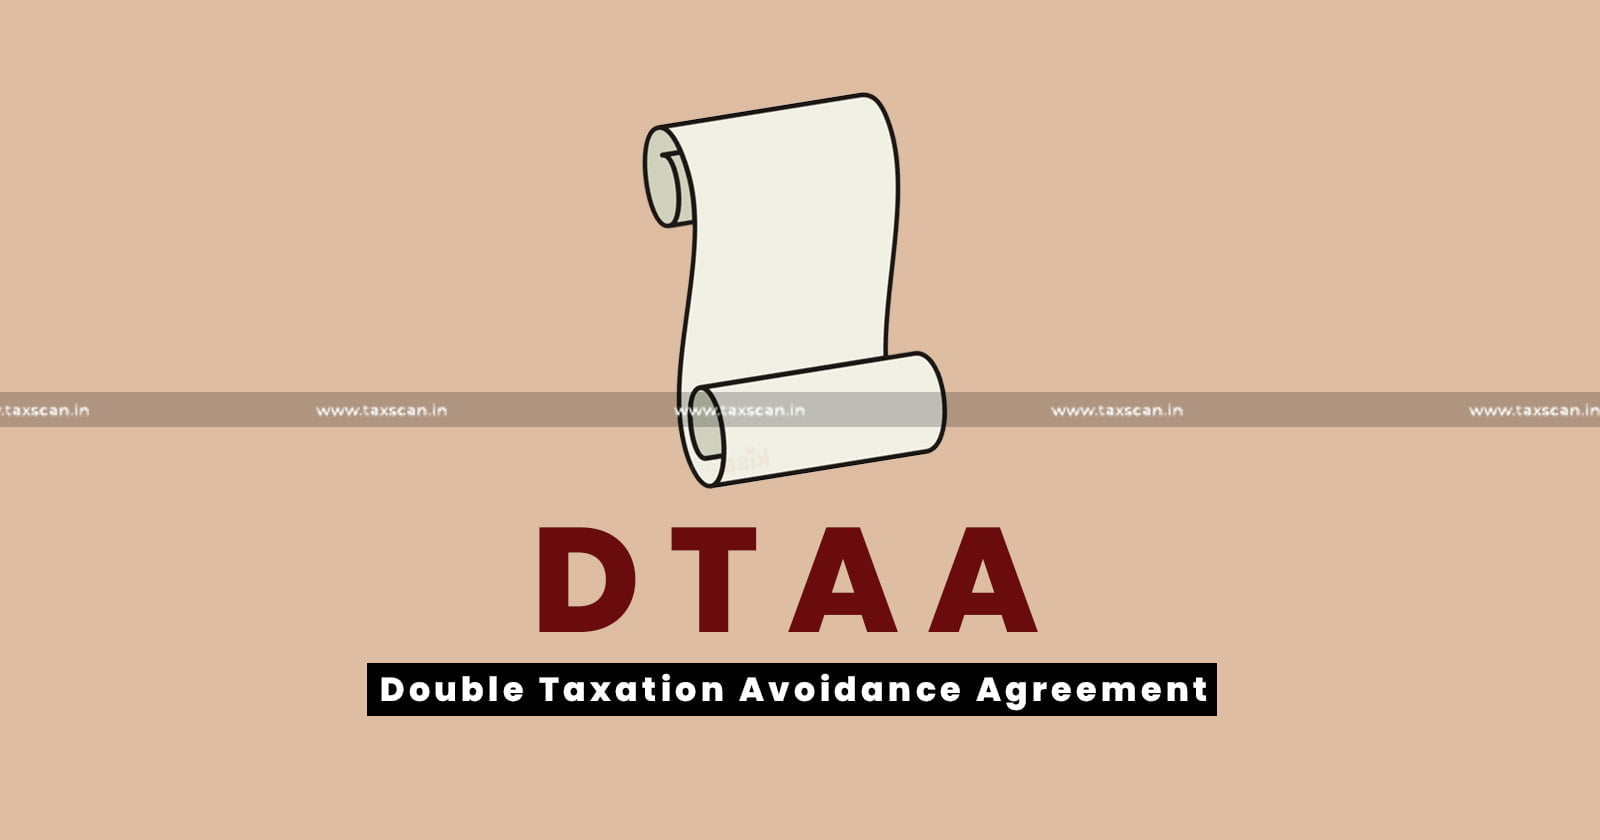 Trademark - Royalty - DTAA - ITAT - Income Tax - Tax - Taxscan